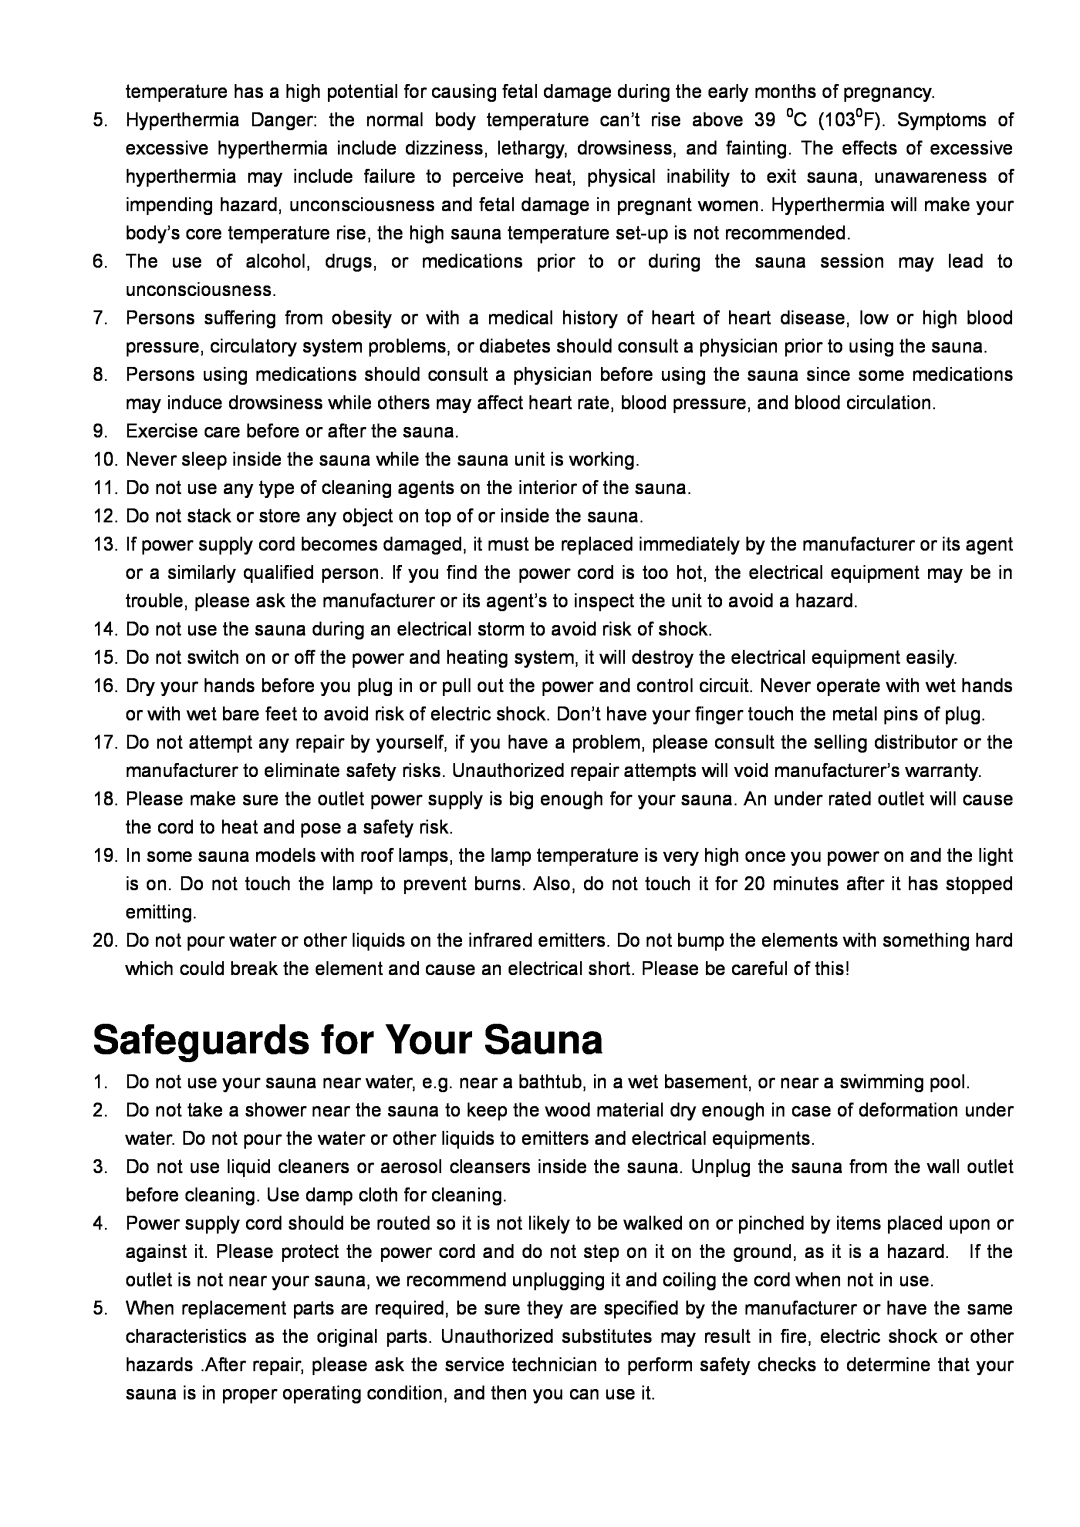 Keys Fitness BS-9101 owner manual Safeguards for Your Sauna 